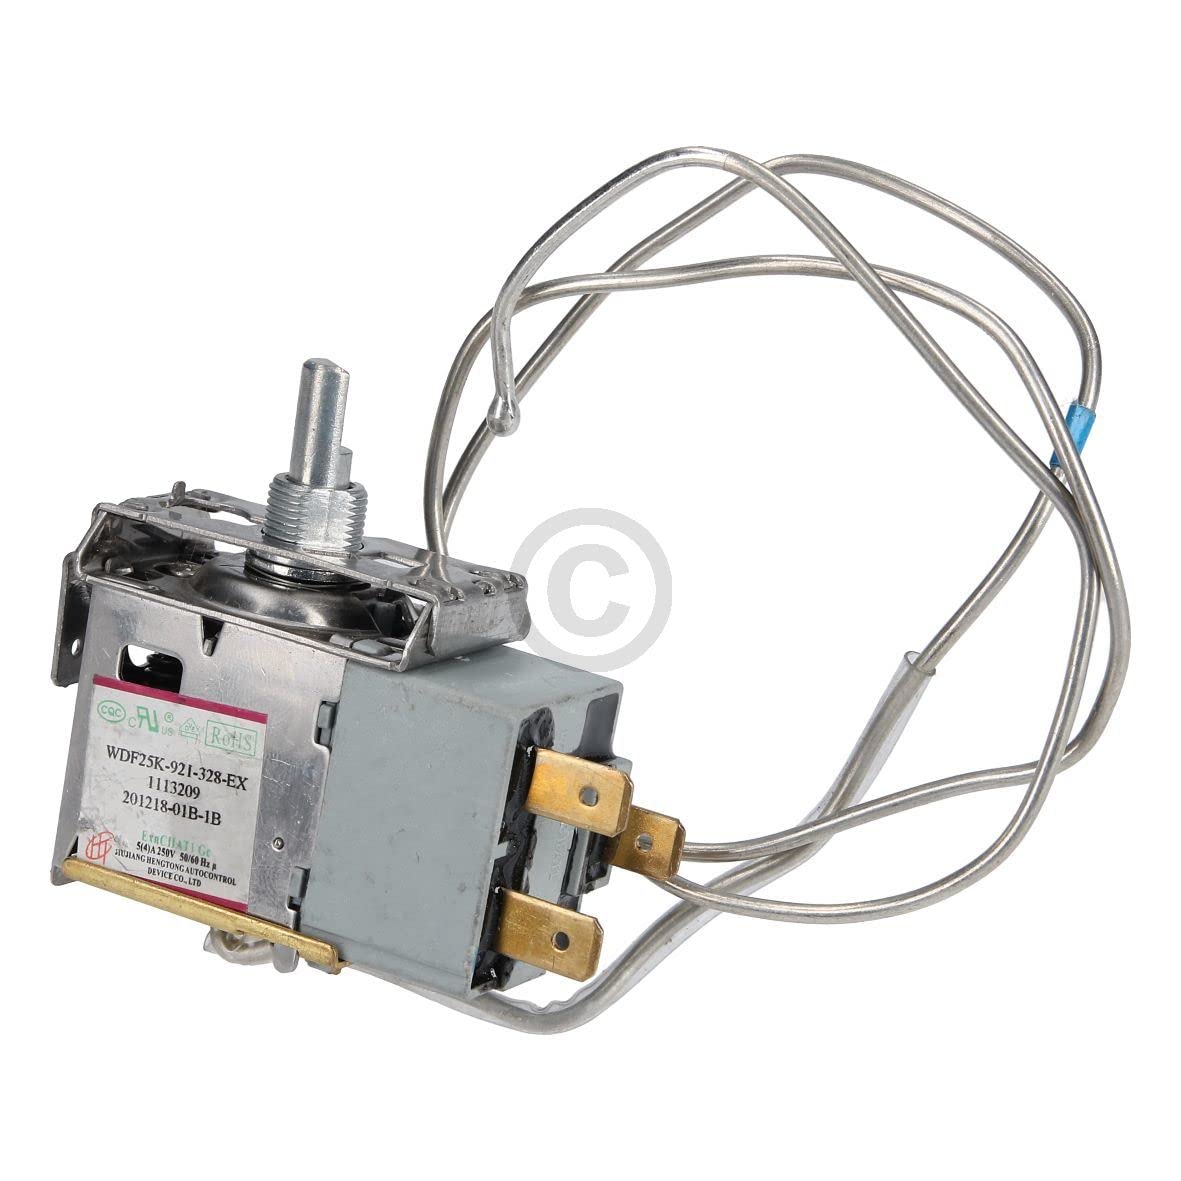 ensipart Kühlschrankthermostat Thermostat für Kühlschrank kompatibel wie Hisense HK1113209 WDF25K-921-328-EX